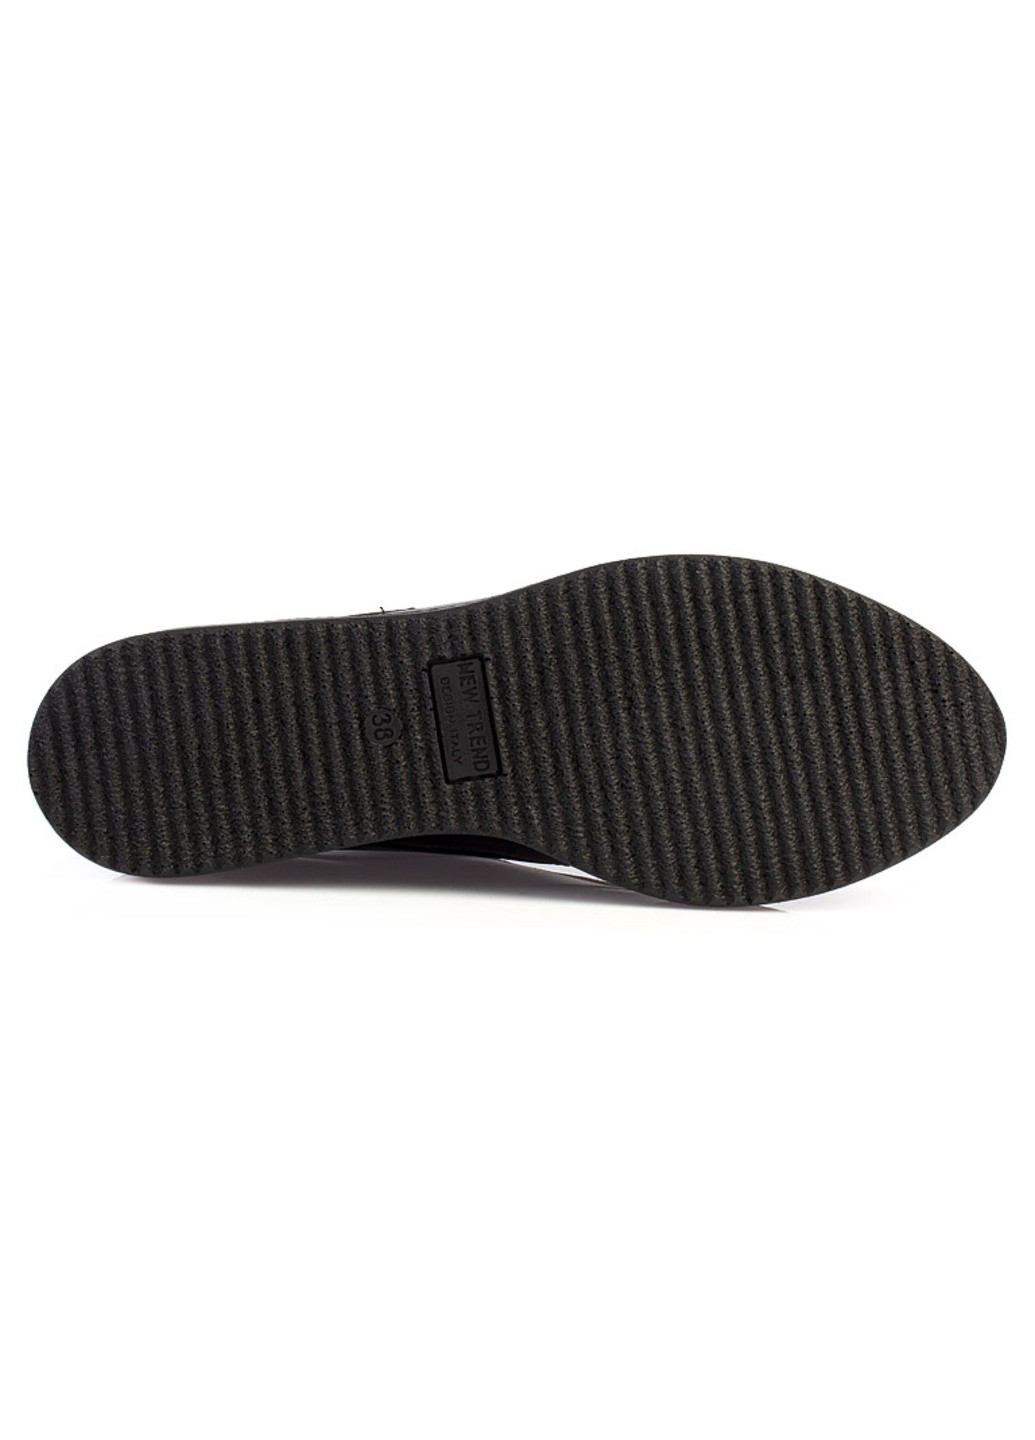 Туфлі жіночі бренду 8401301_(1) ModaMilano (257375749)